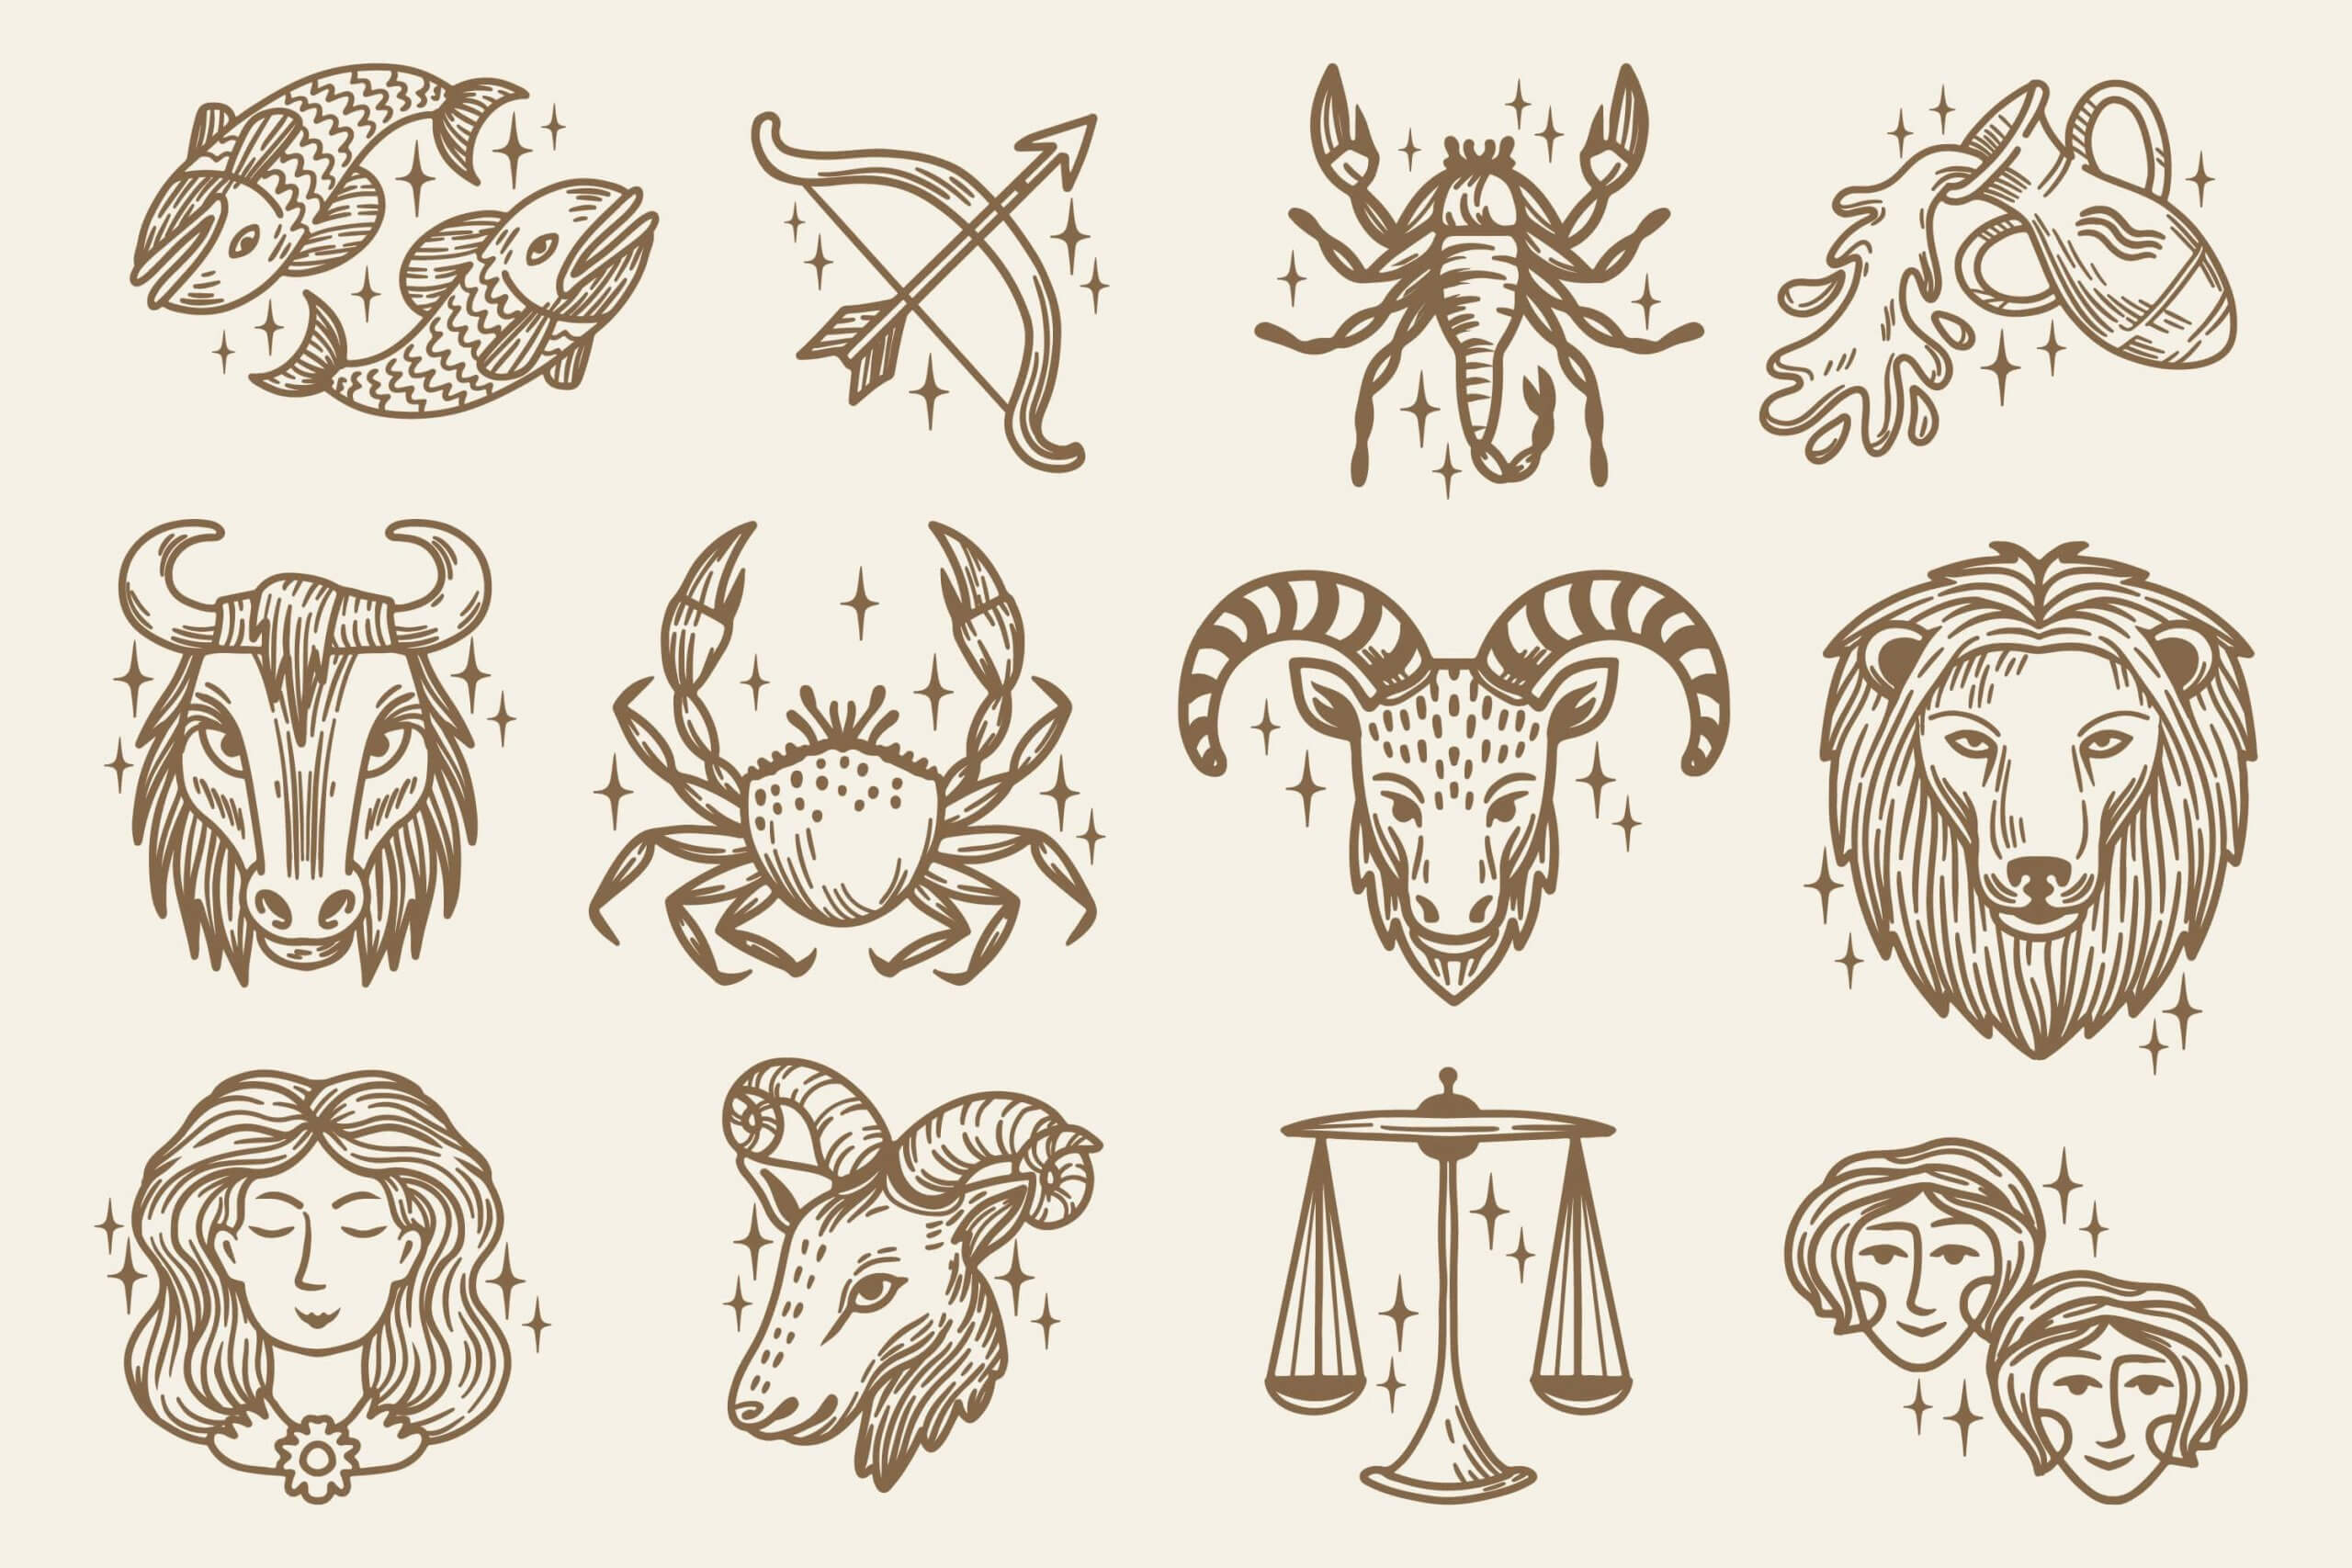 znamenia zverokruhu - horoskop (zodiac)